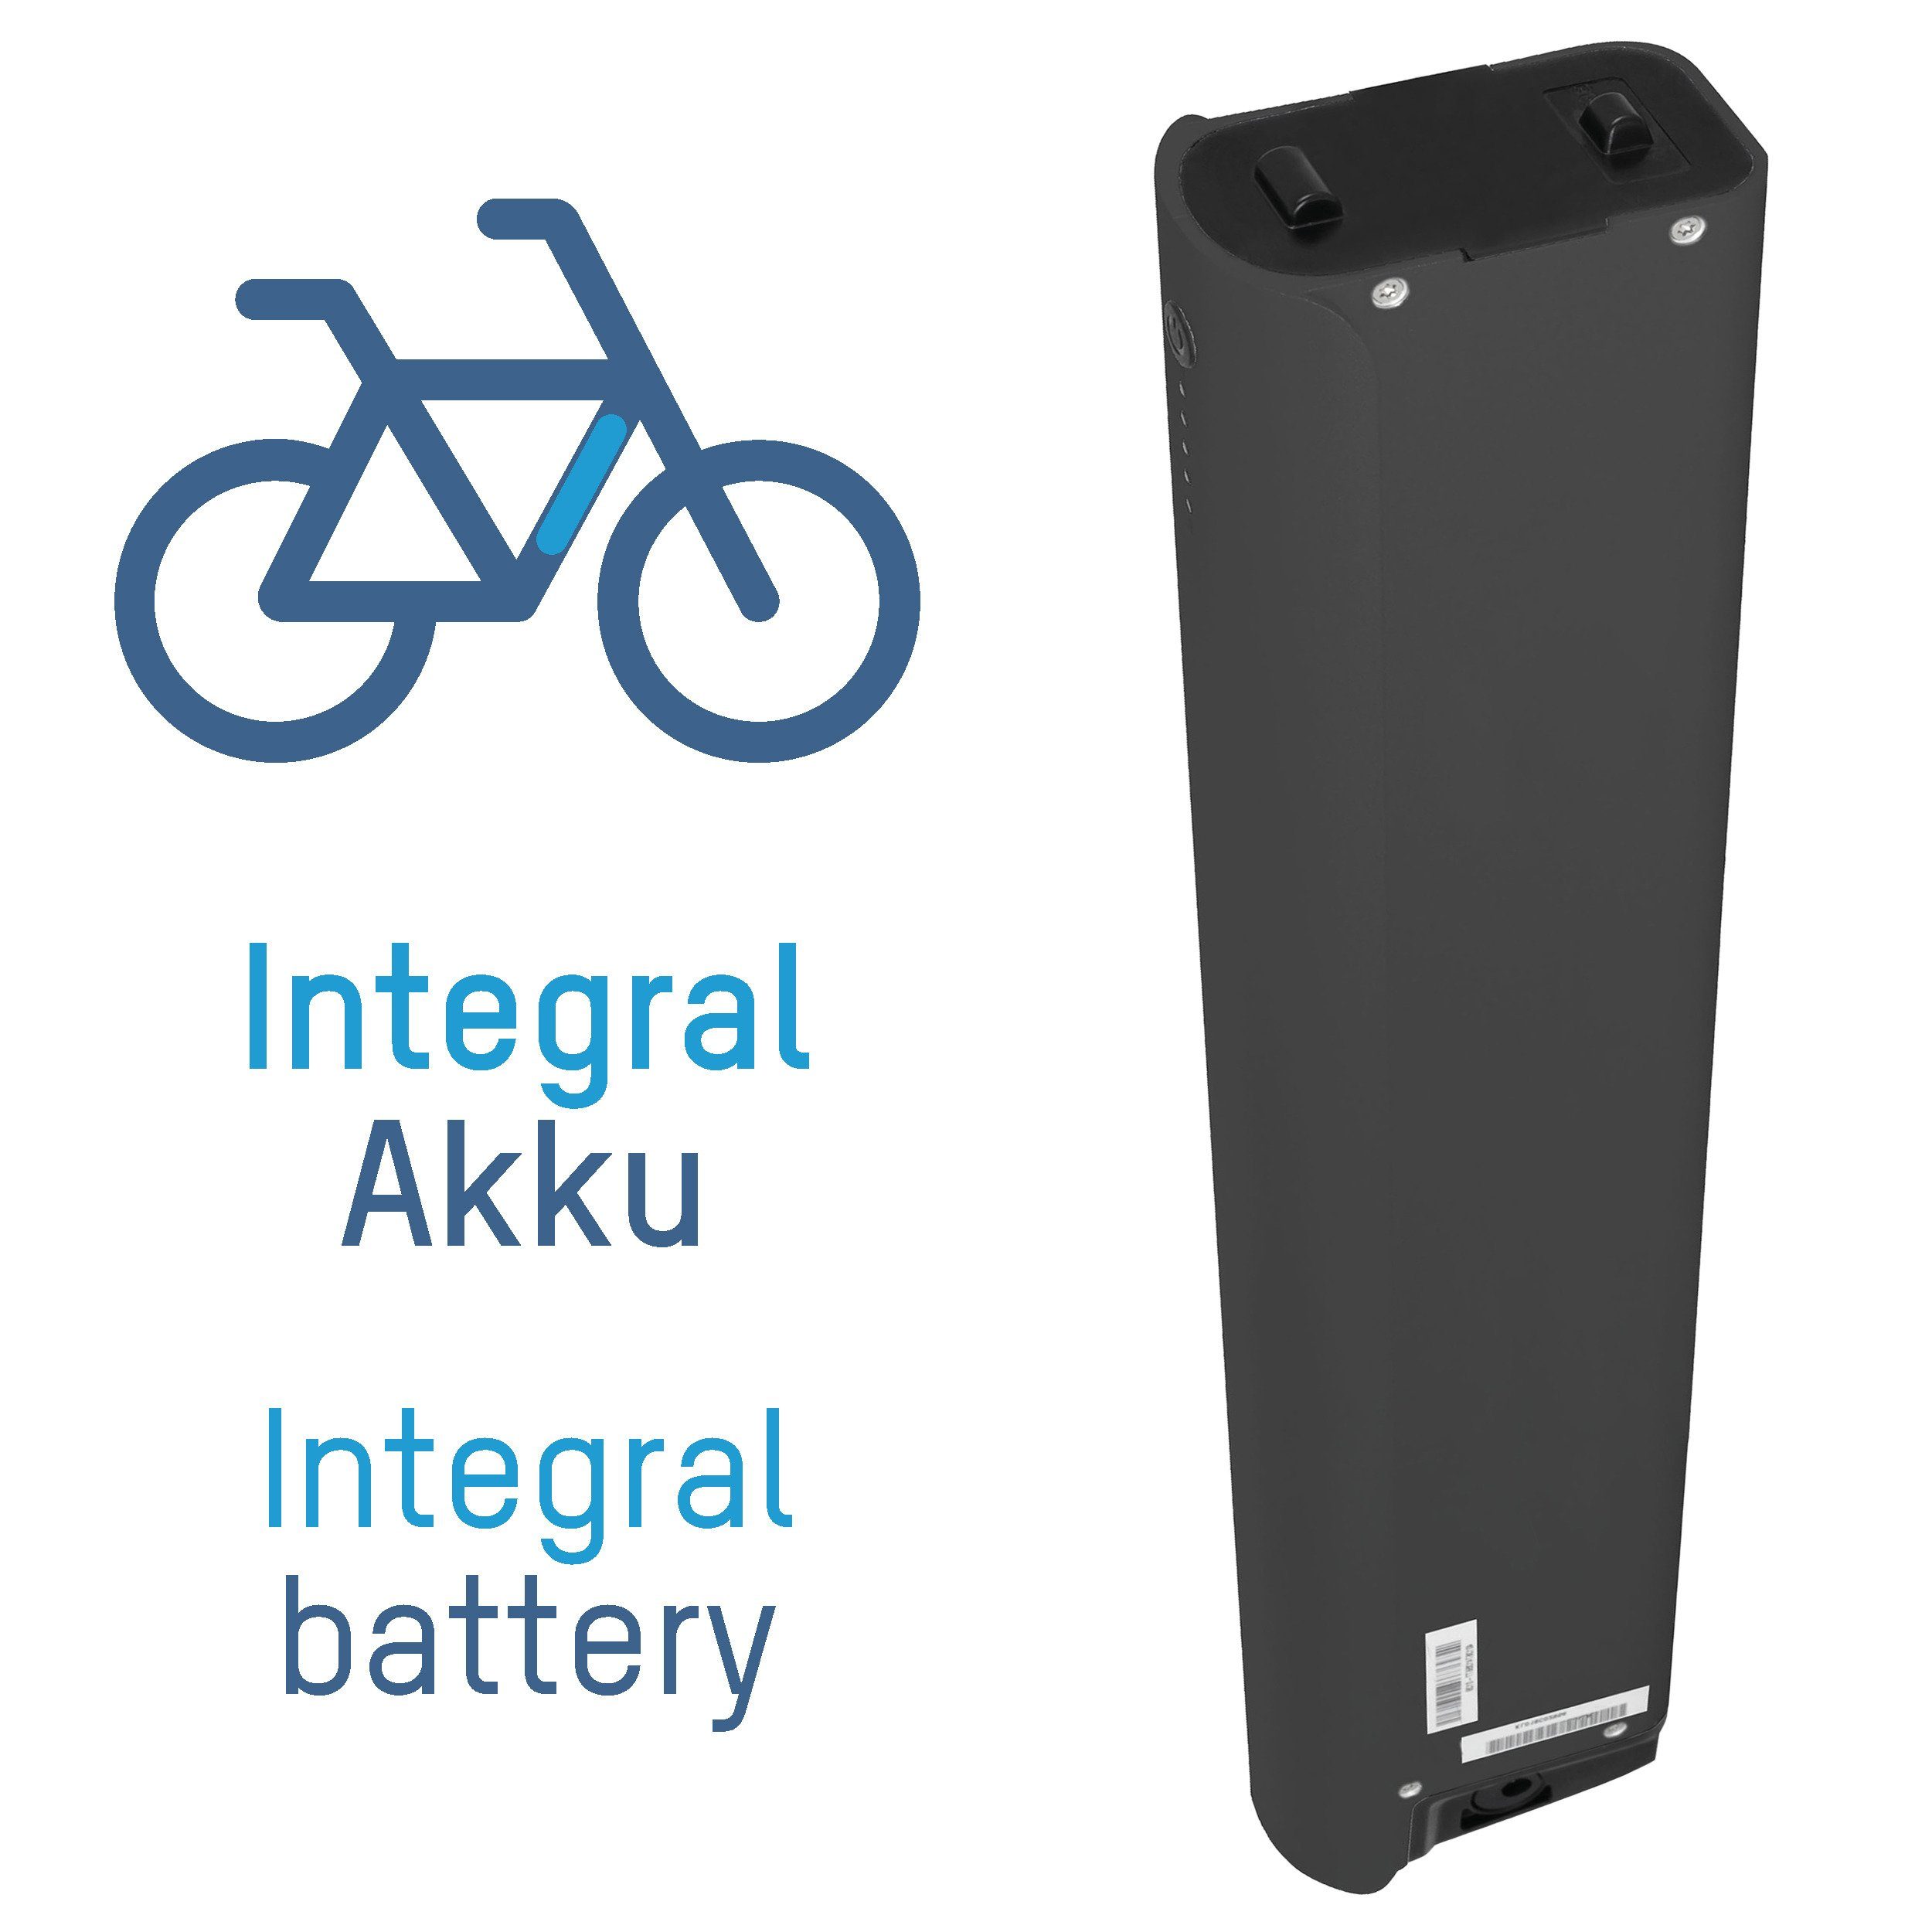 V Akku Wh E-Bike Pedelec km zu Akku und Kapazität Reichweite mit Integral bis 11,6Ah, 417 100 E-Bike ANSMANN® 36